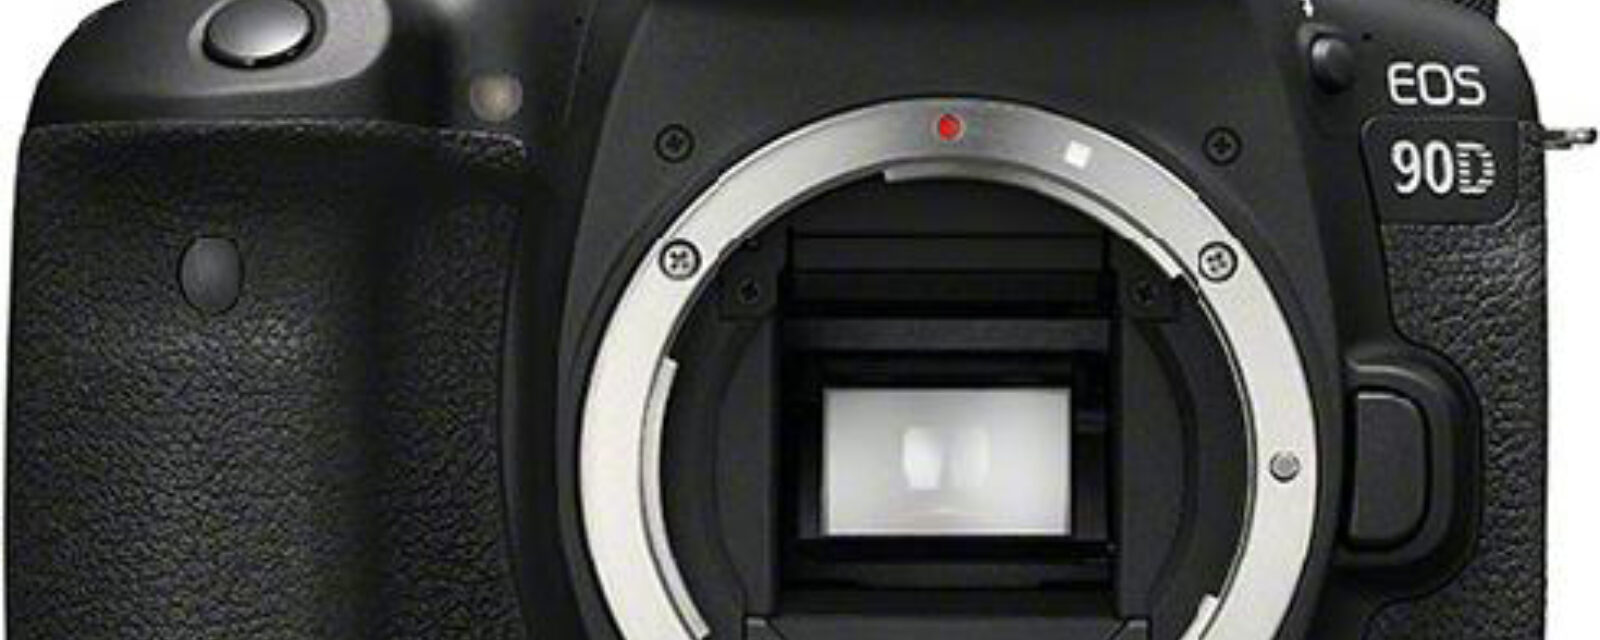 Digitale camera EOS 90D